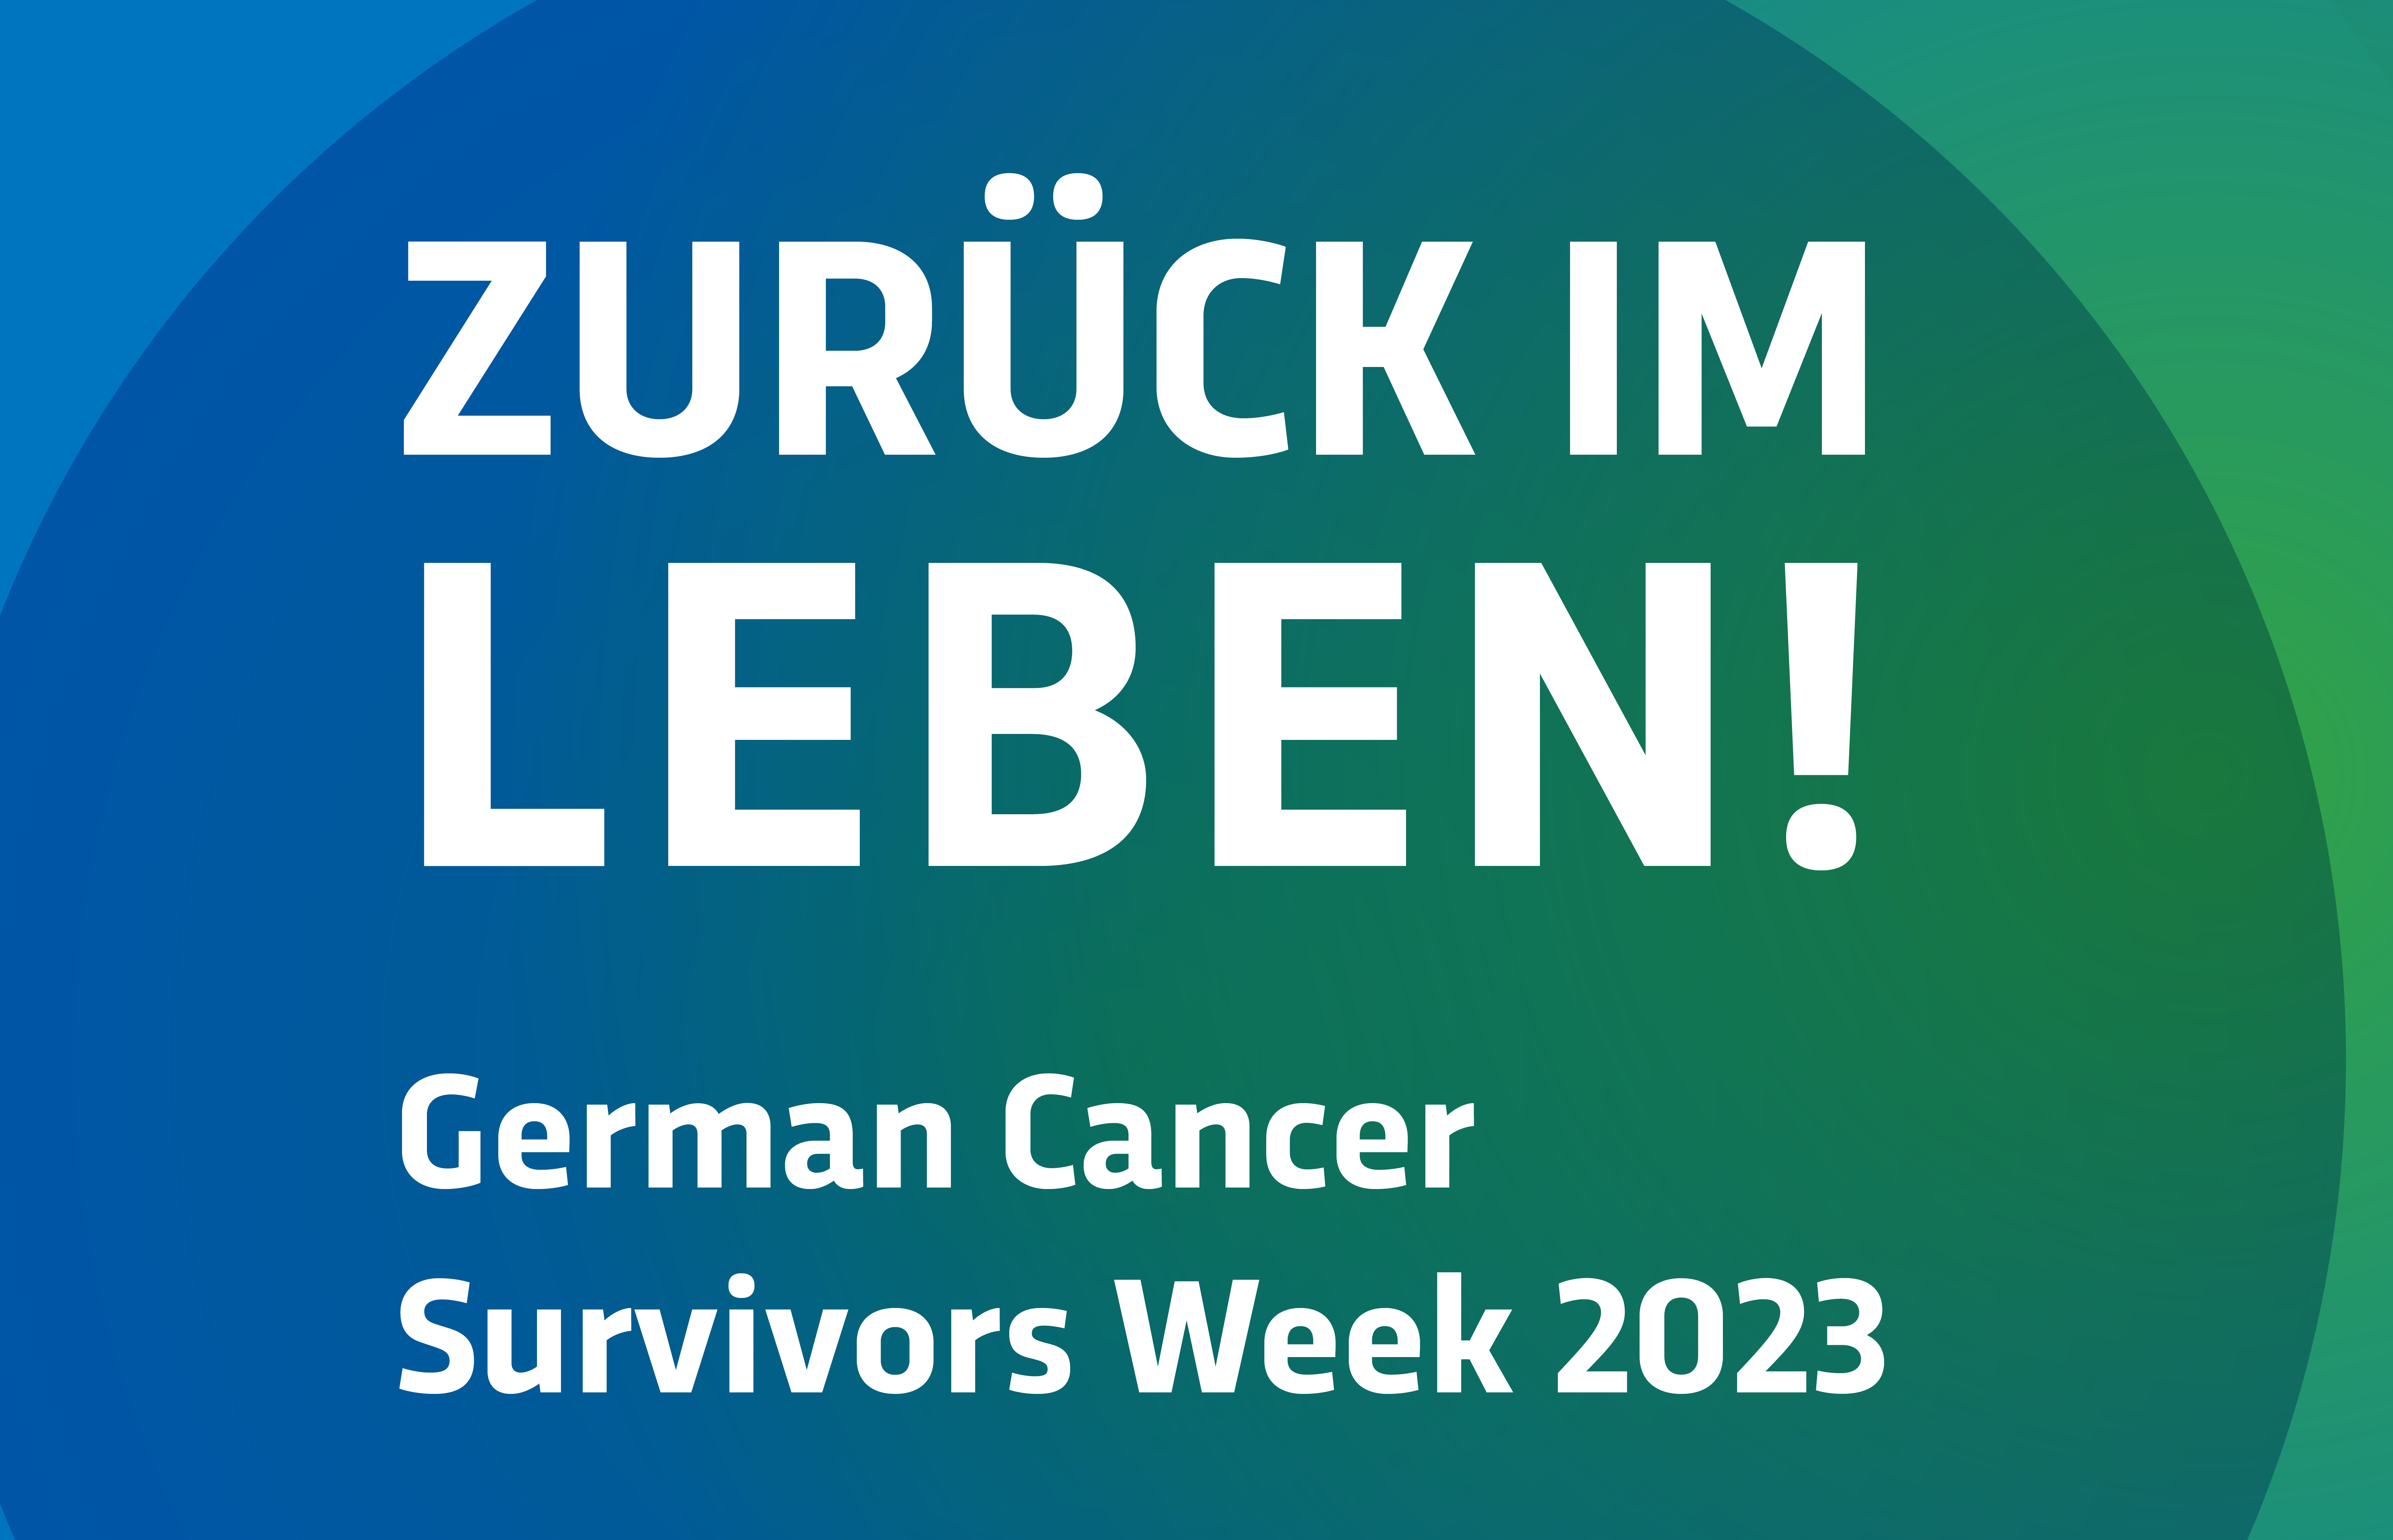 German Cancer Survivors Week 2023